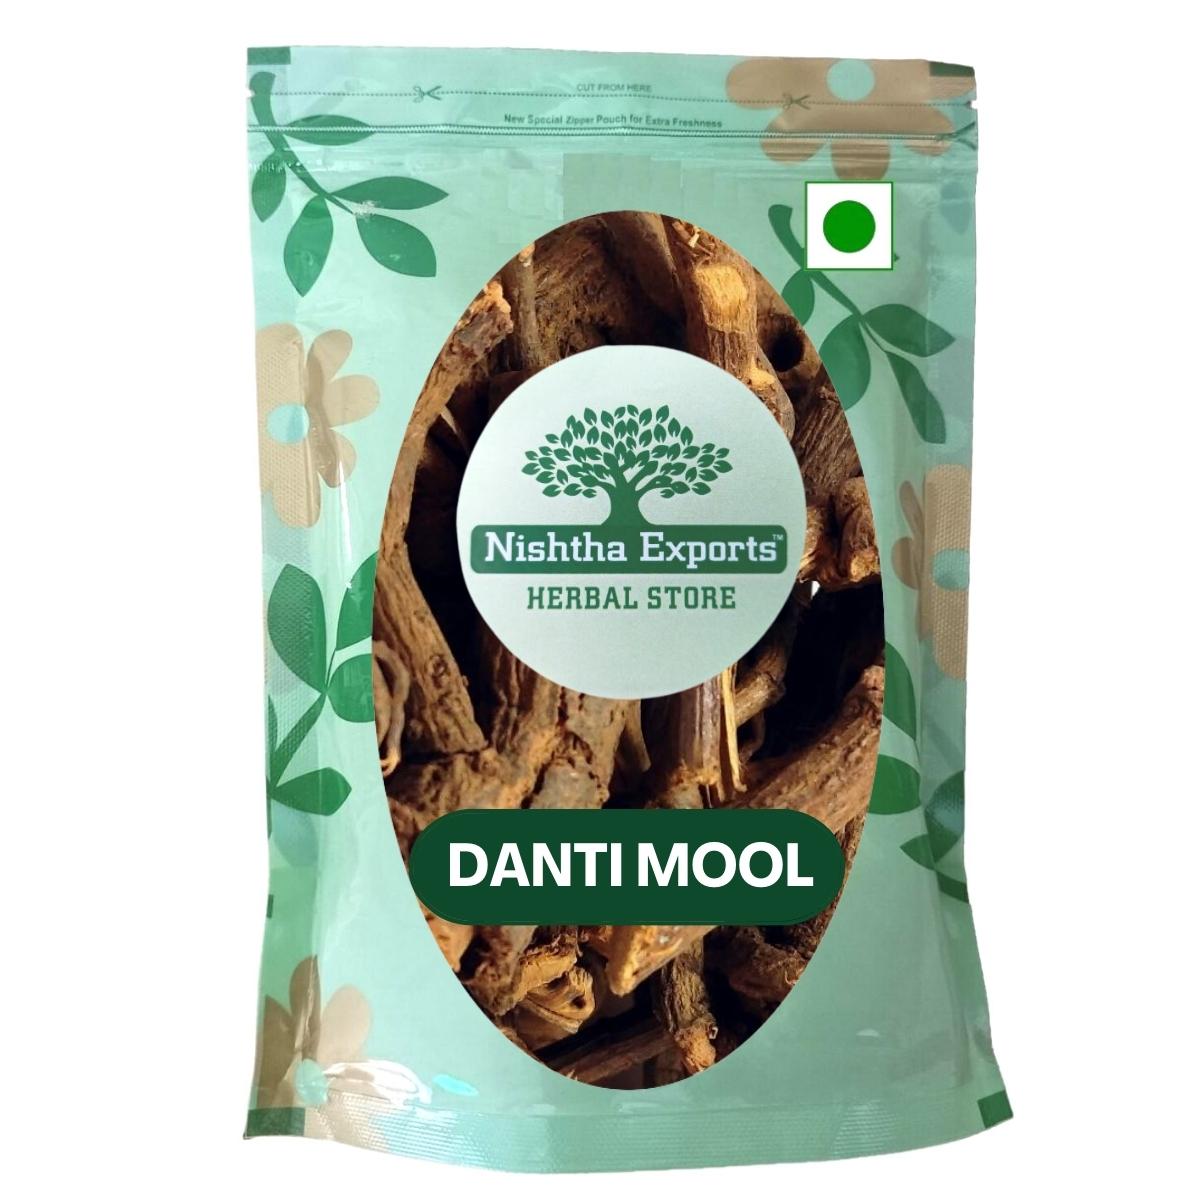 Dantimool -Danti mool -Baliospermum Montanum-Hakum -दंतिमूल- Wild Castor - Red Physic Nut Raw Herb